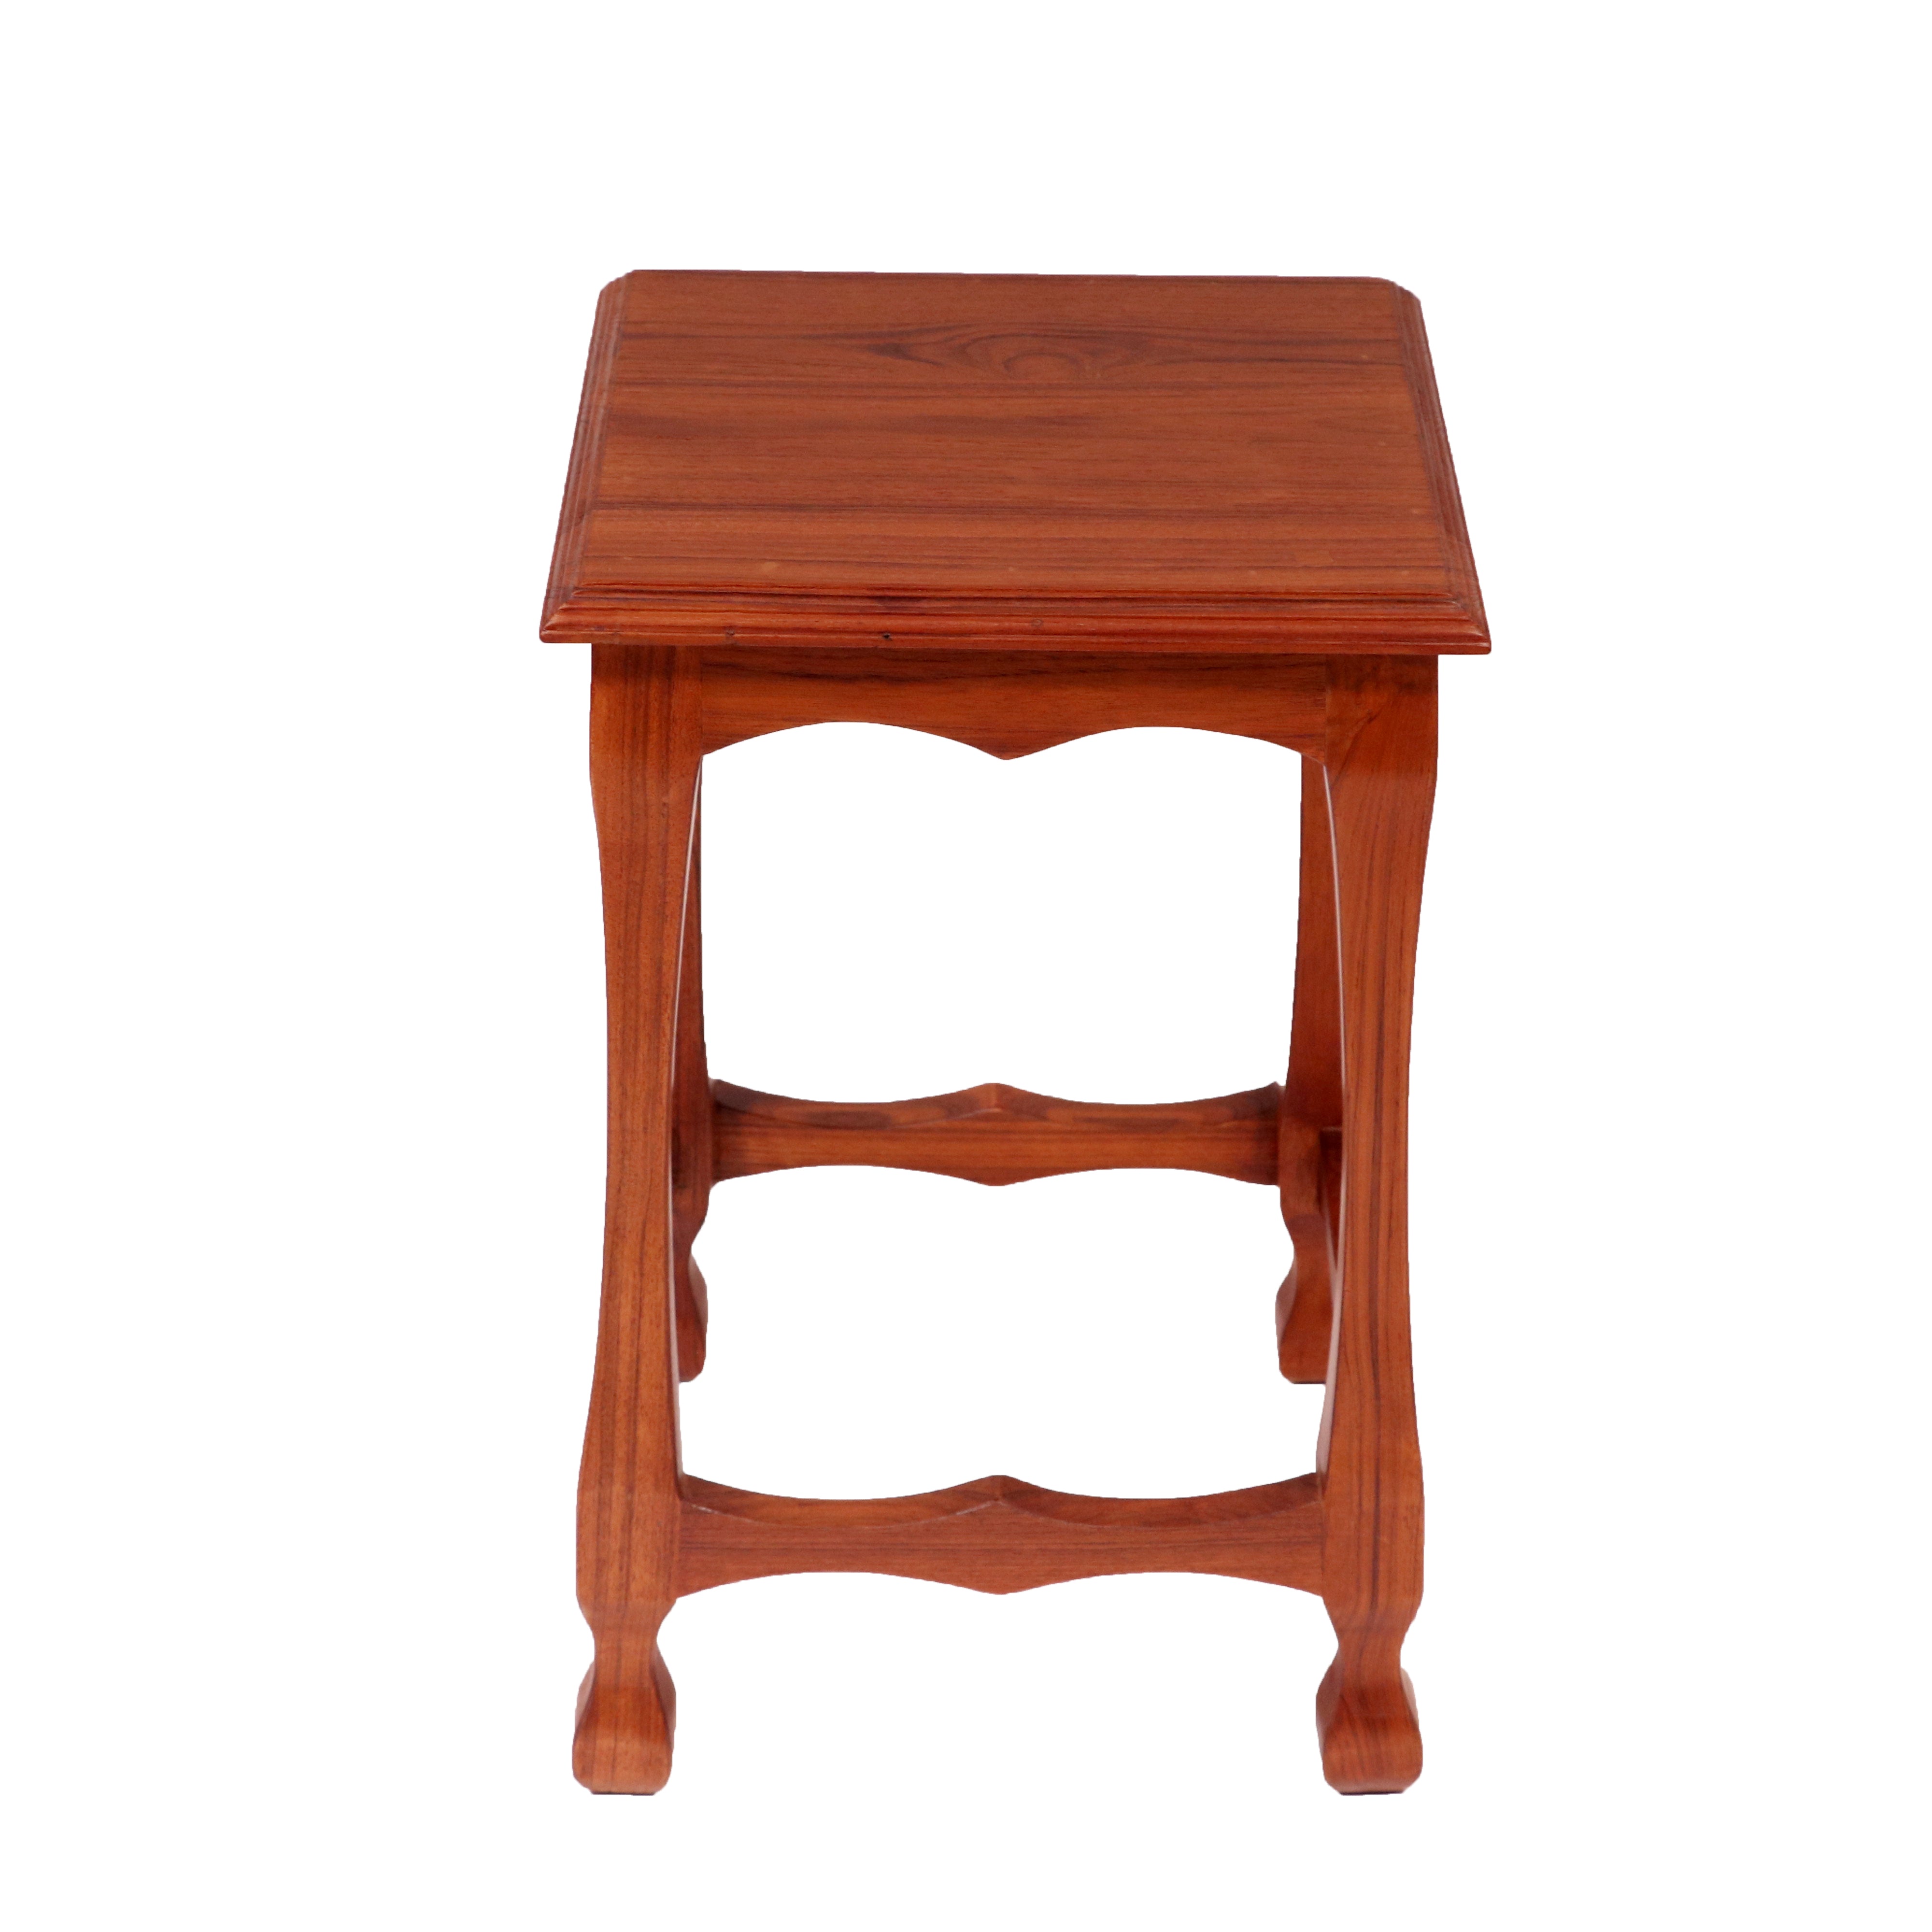 Classic wave pattern durable Teak wood stool Stool